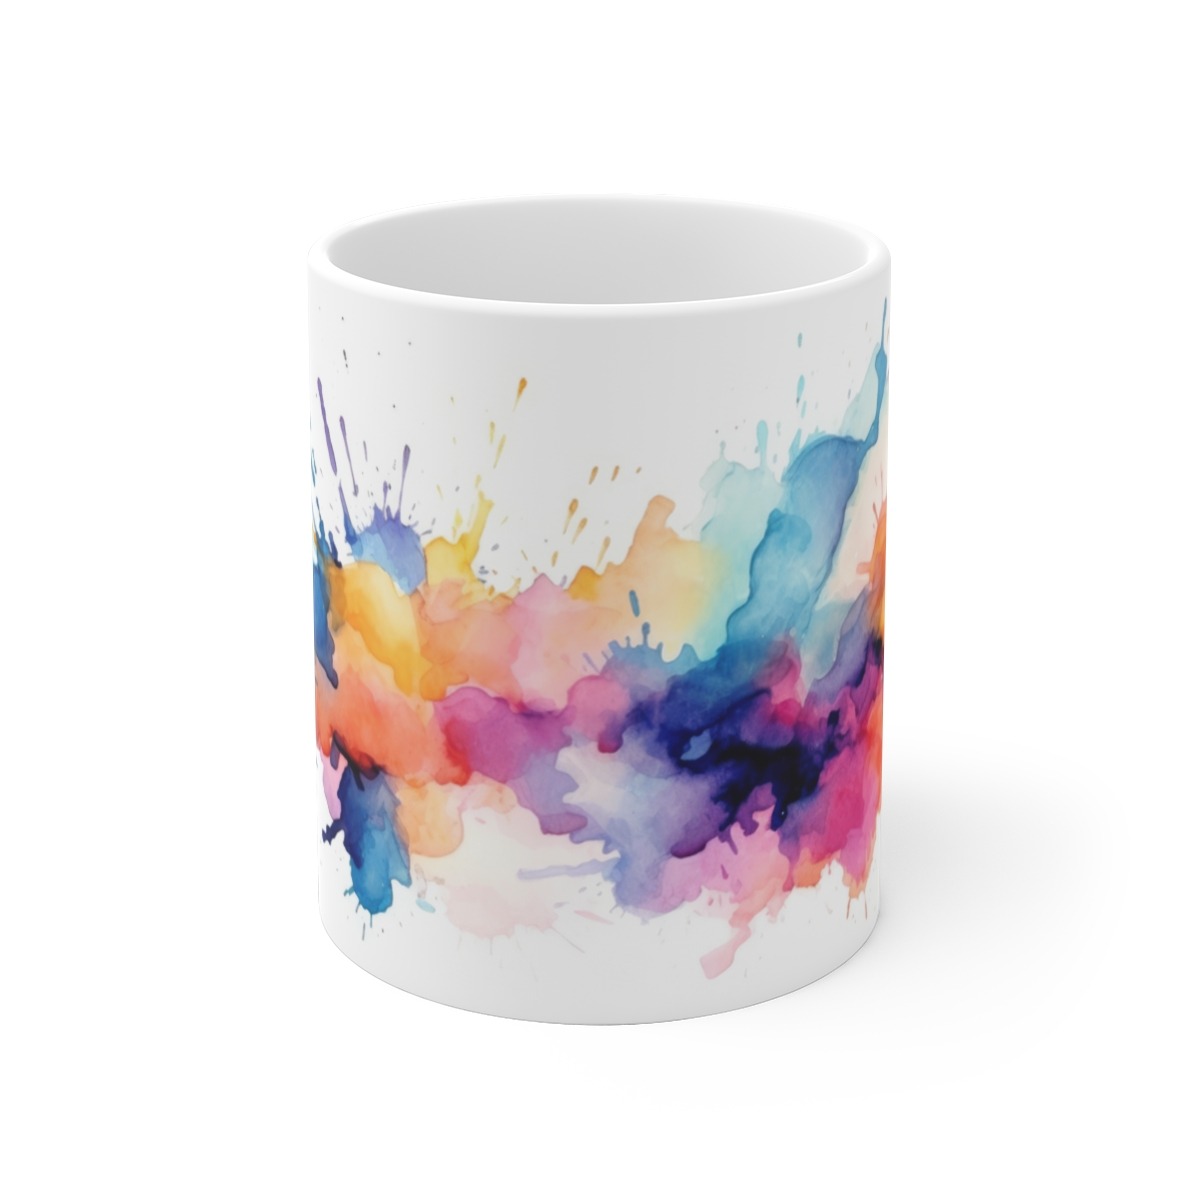 Kreative Wasserfarbenklecks Tasse